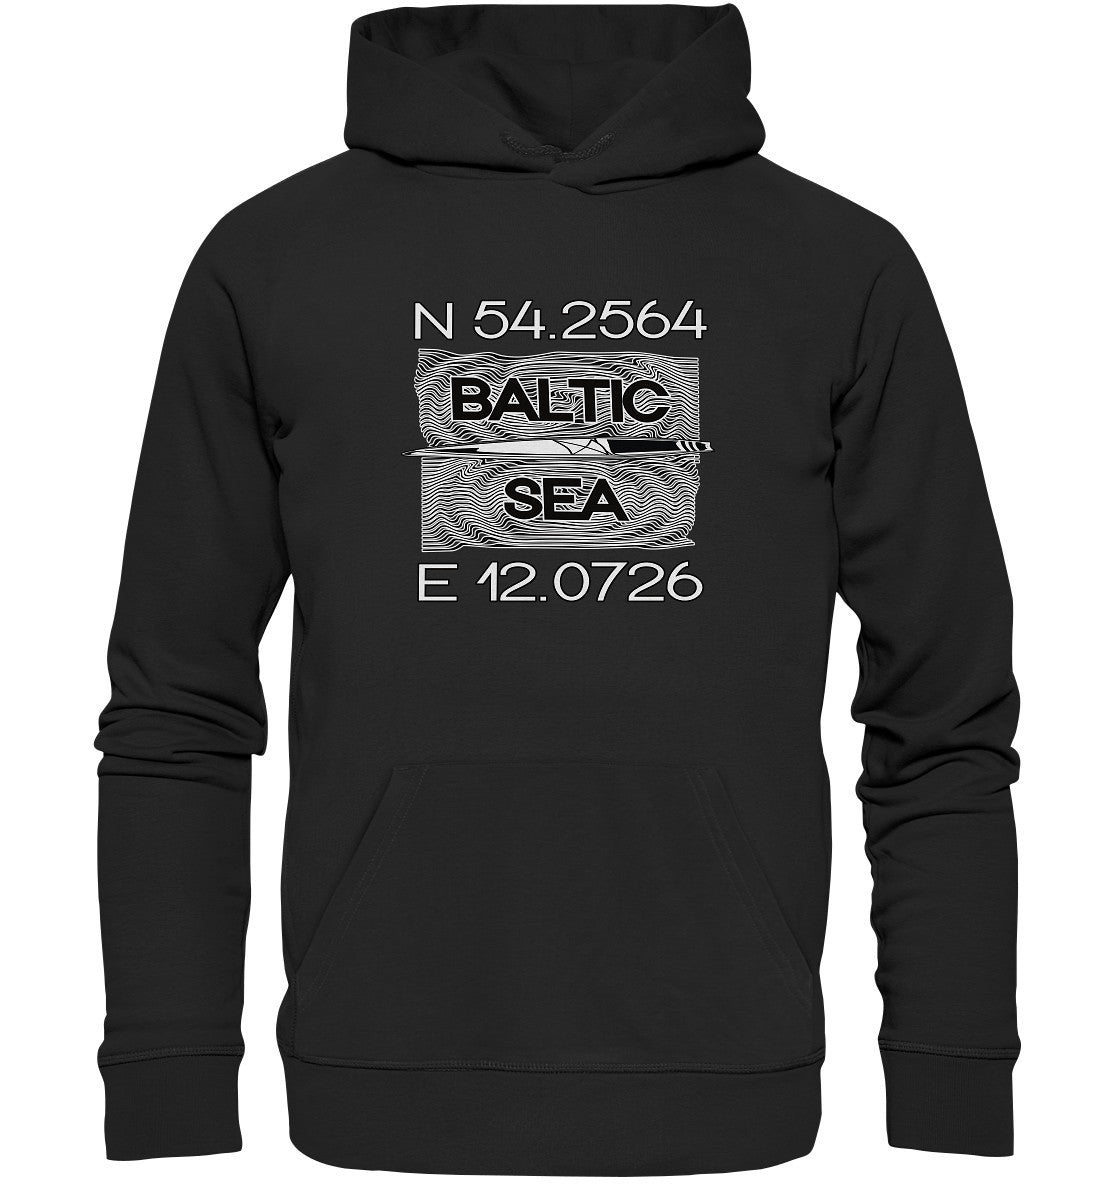 SUP-Baltic Sea - Organic Hoodie